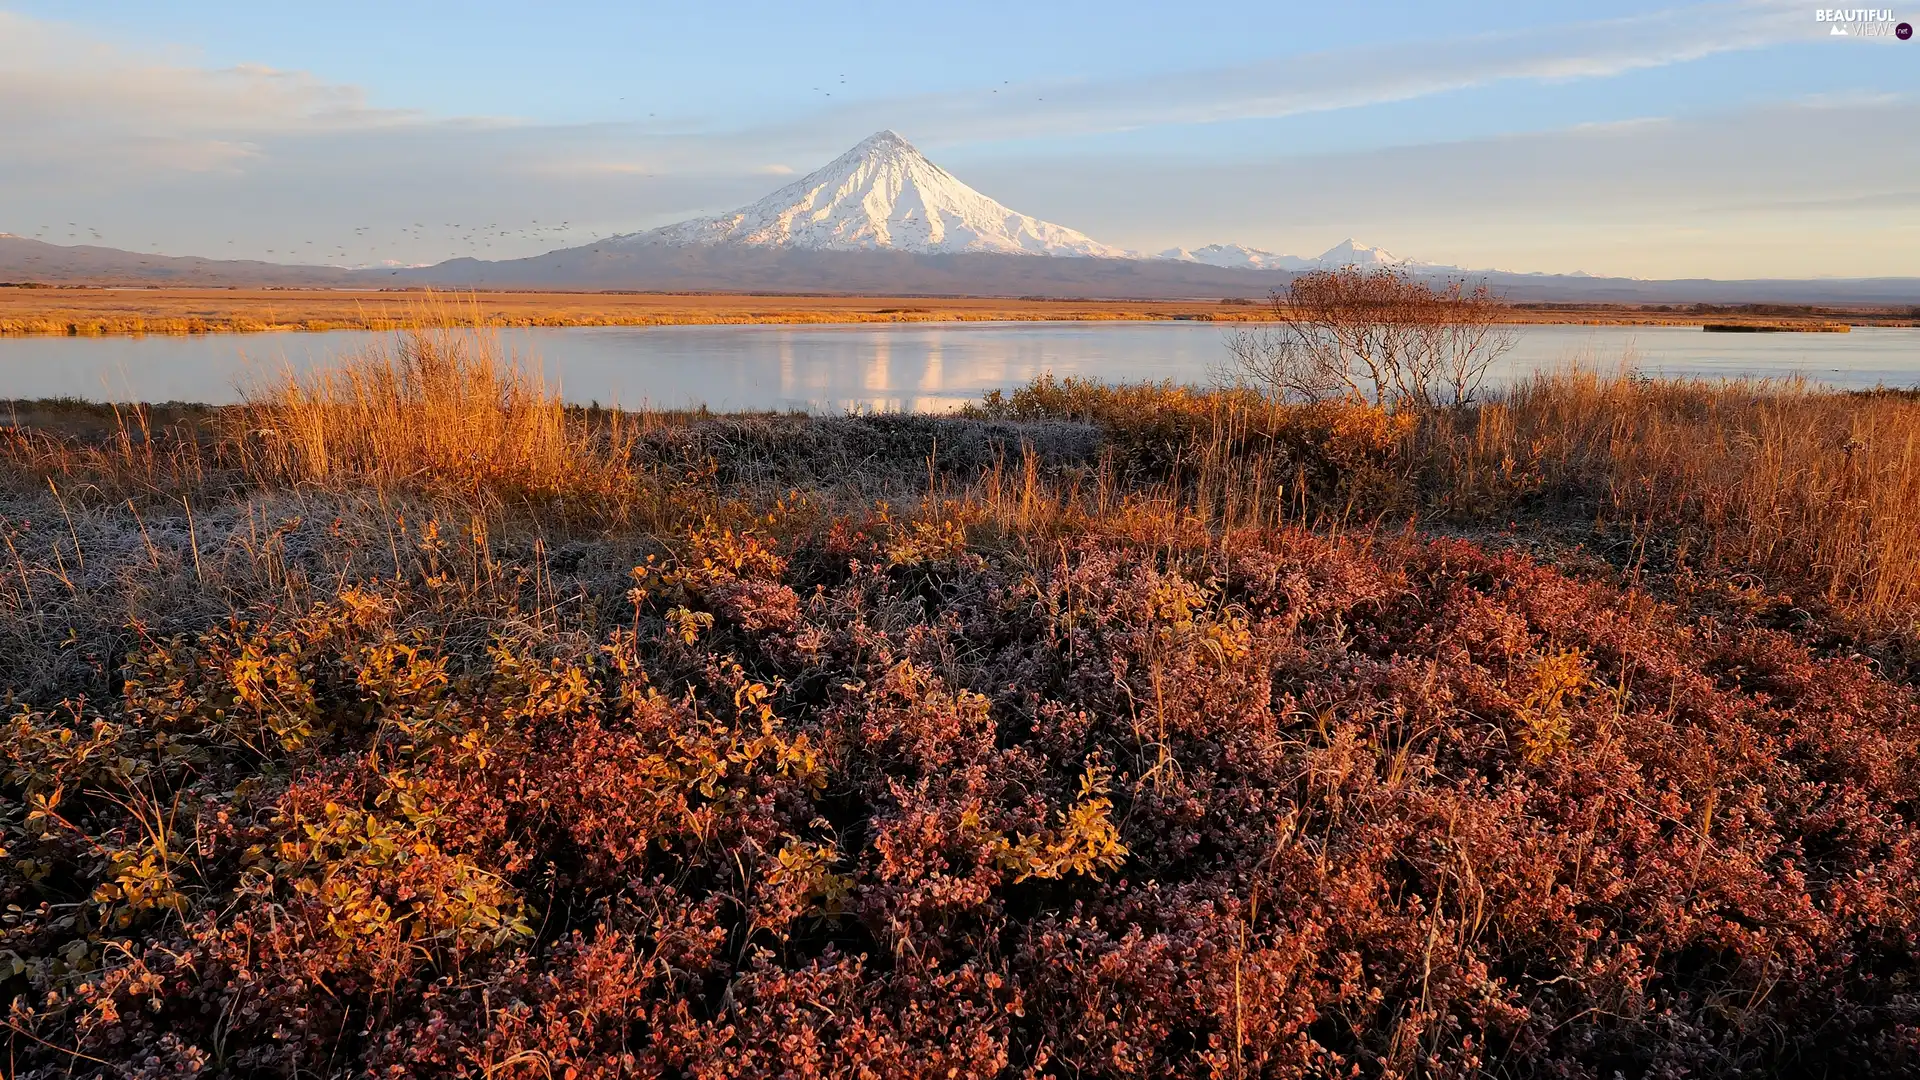 Kronocki Biosphere Reserve, Kronocki Lake, grass, mountains, autumn, Kamchatka, Russia, Stratovolcano Kronocka Sopka